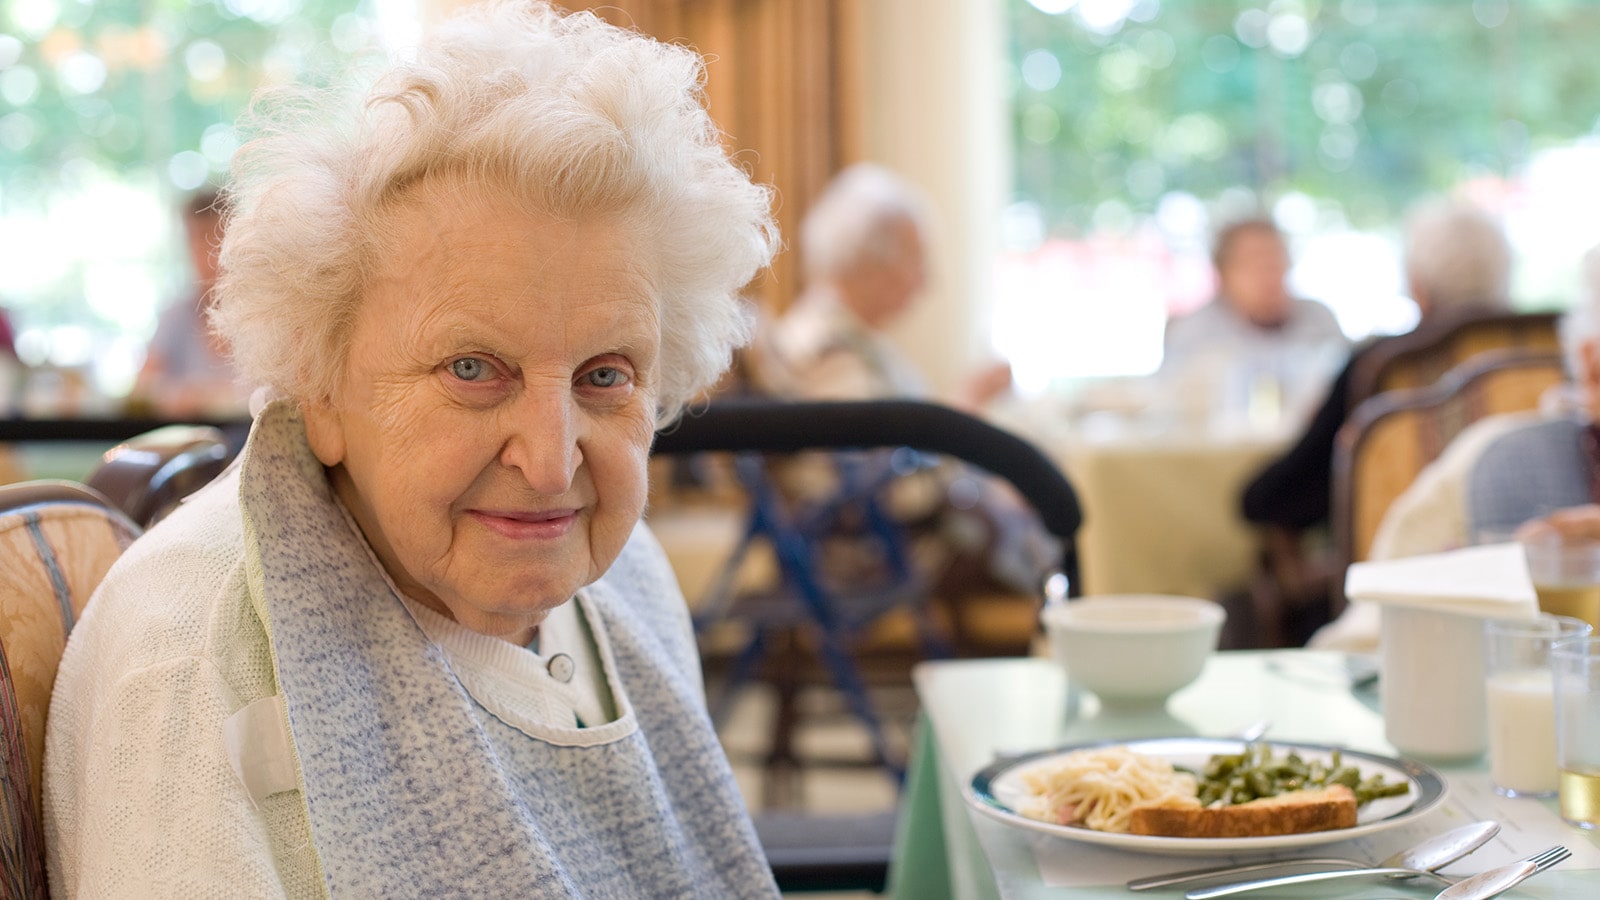 Senior woman with white hair wearing bib at dinner table